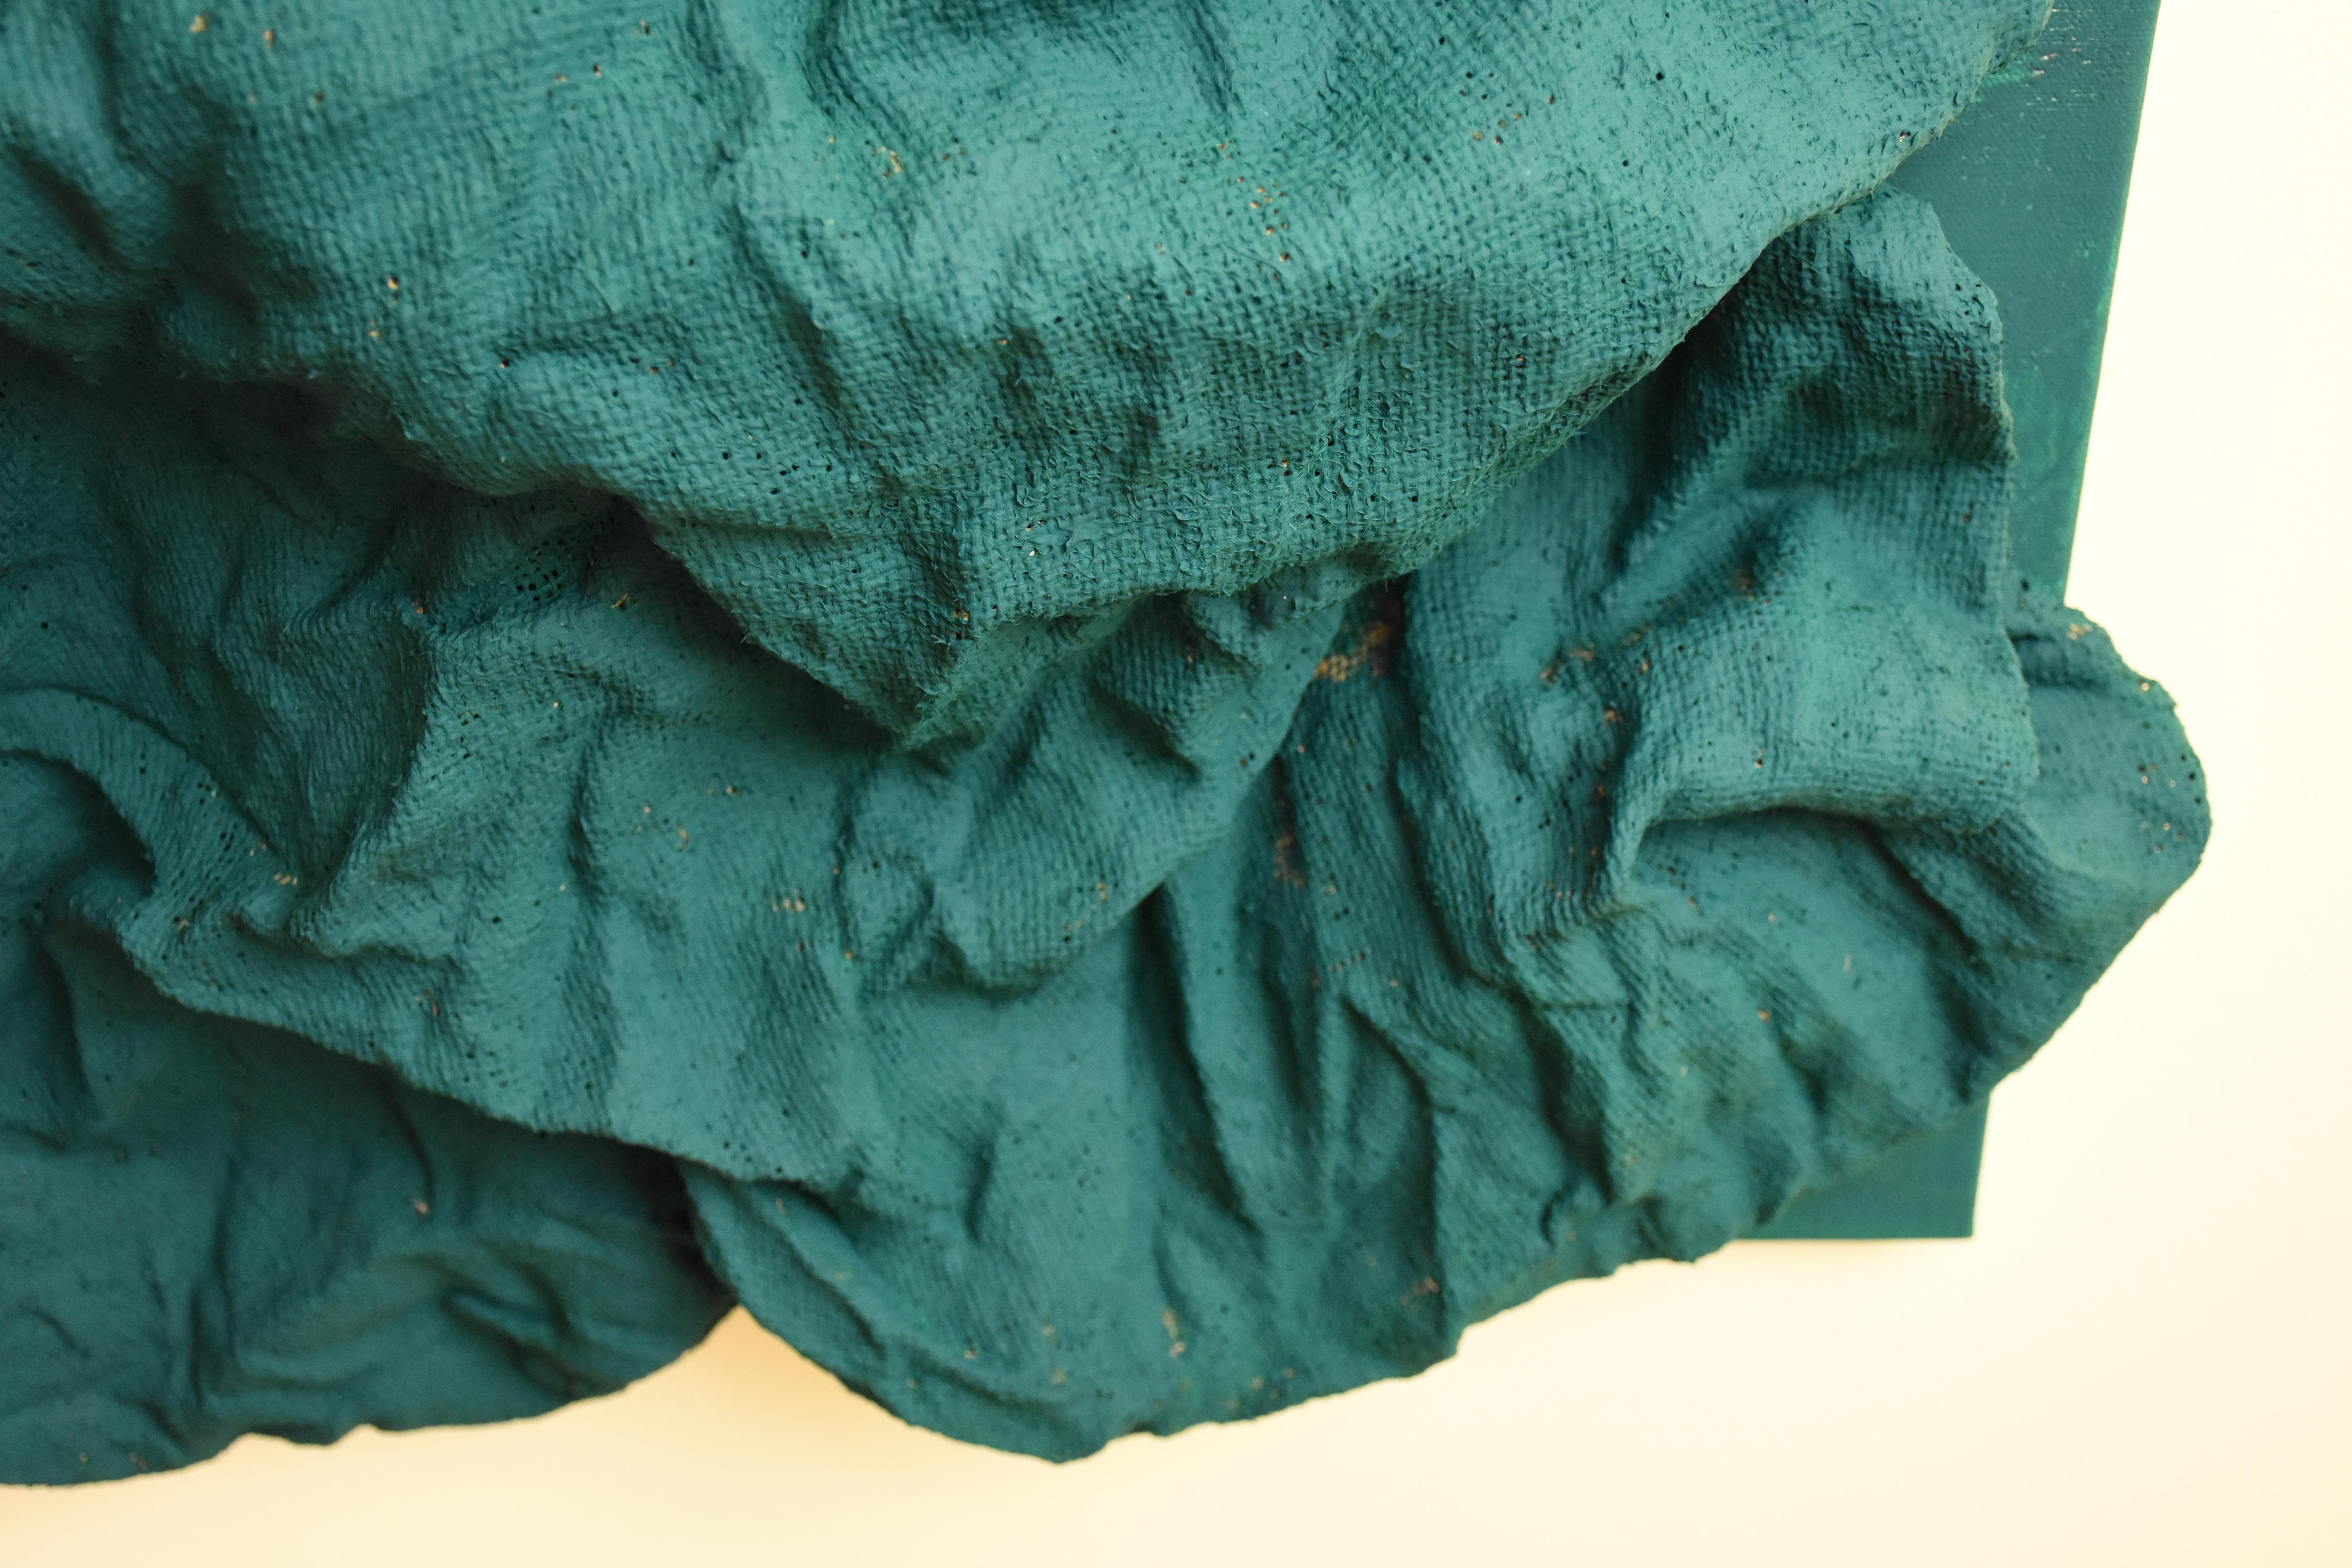 Emerald Green Folds (hardened fabric, wall green art, contemporary art design) - Abstract Sculpture by Chloe Hedden